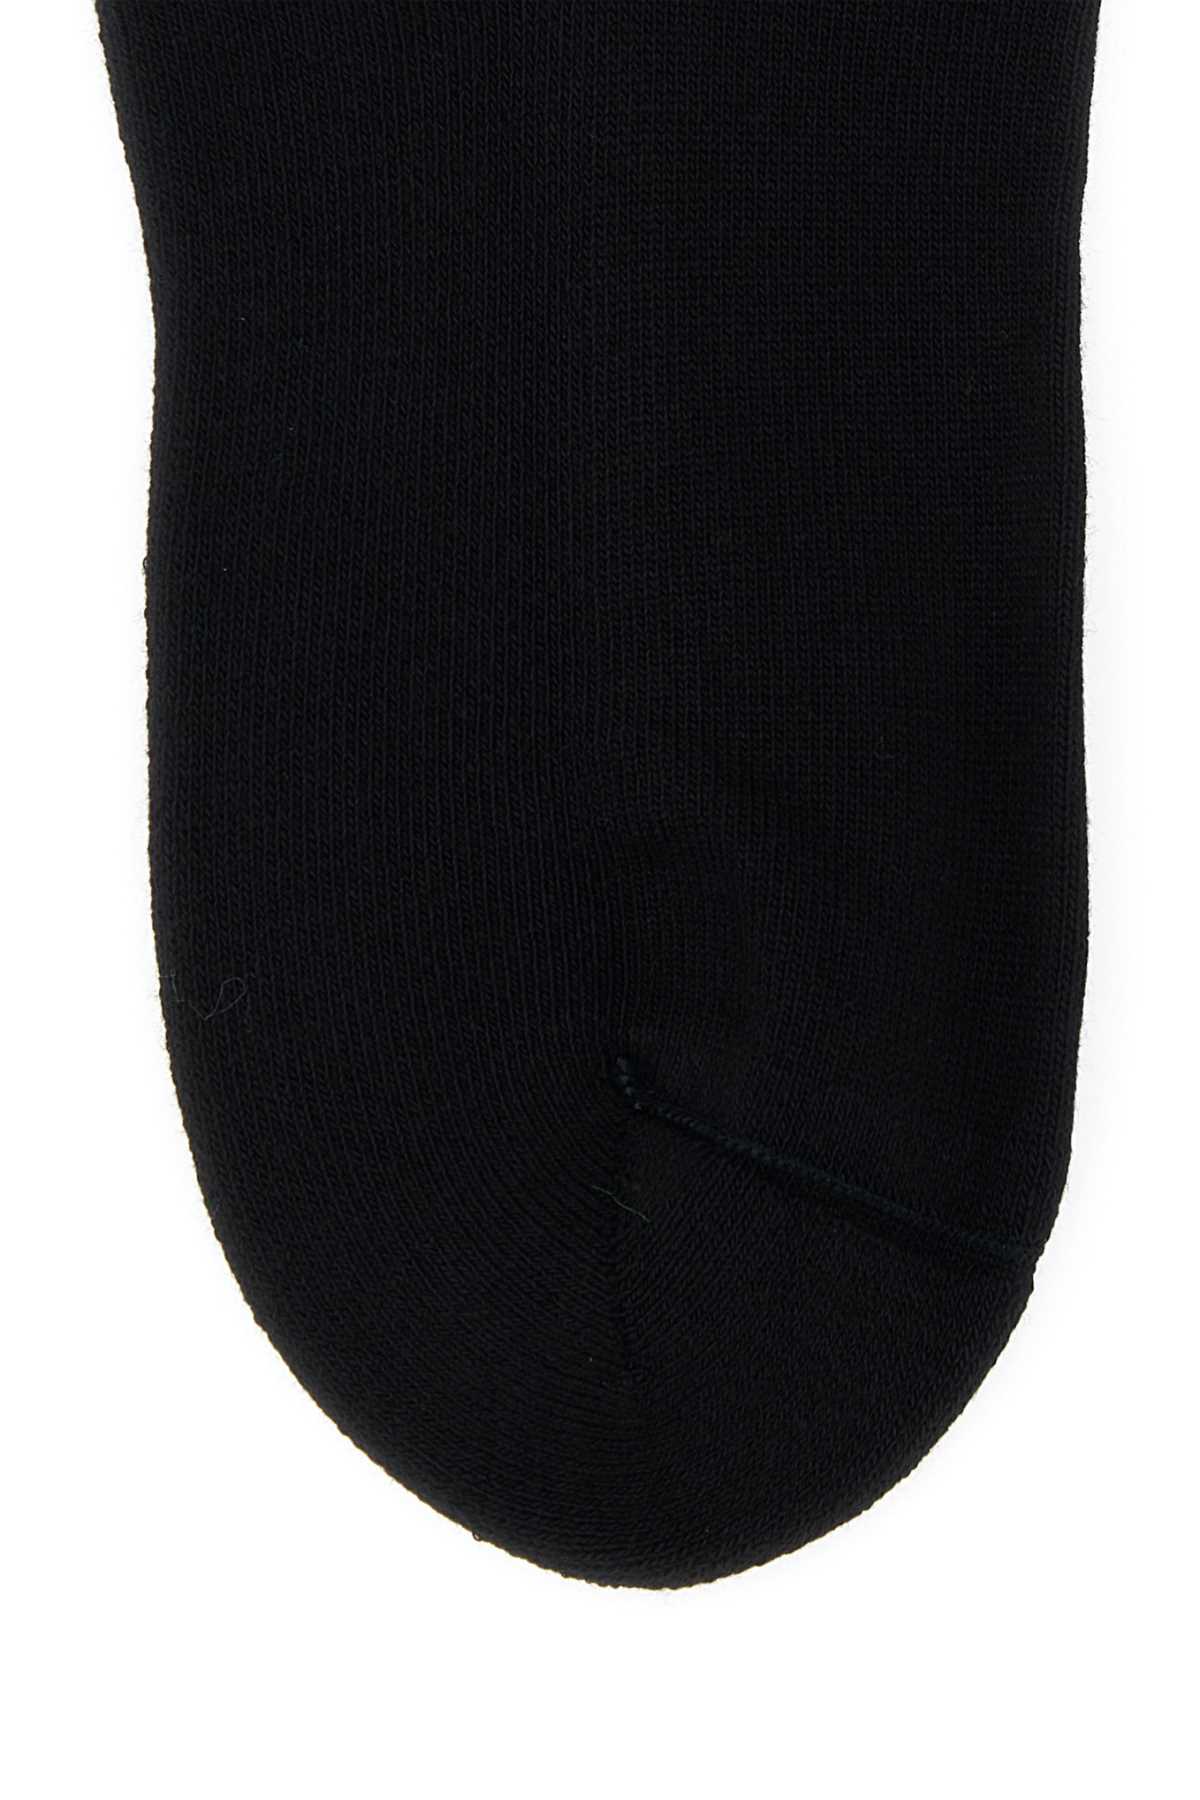 Shop Burberry Black Stretch Cotton Blend Socks